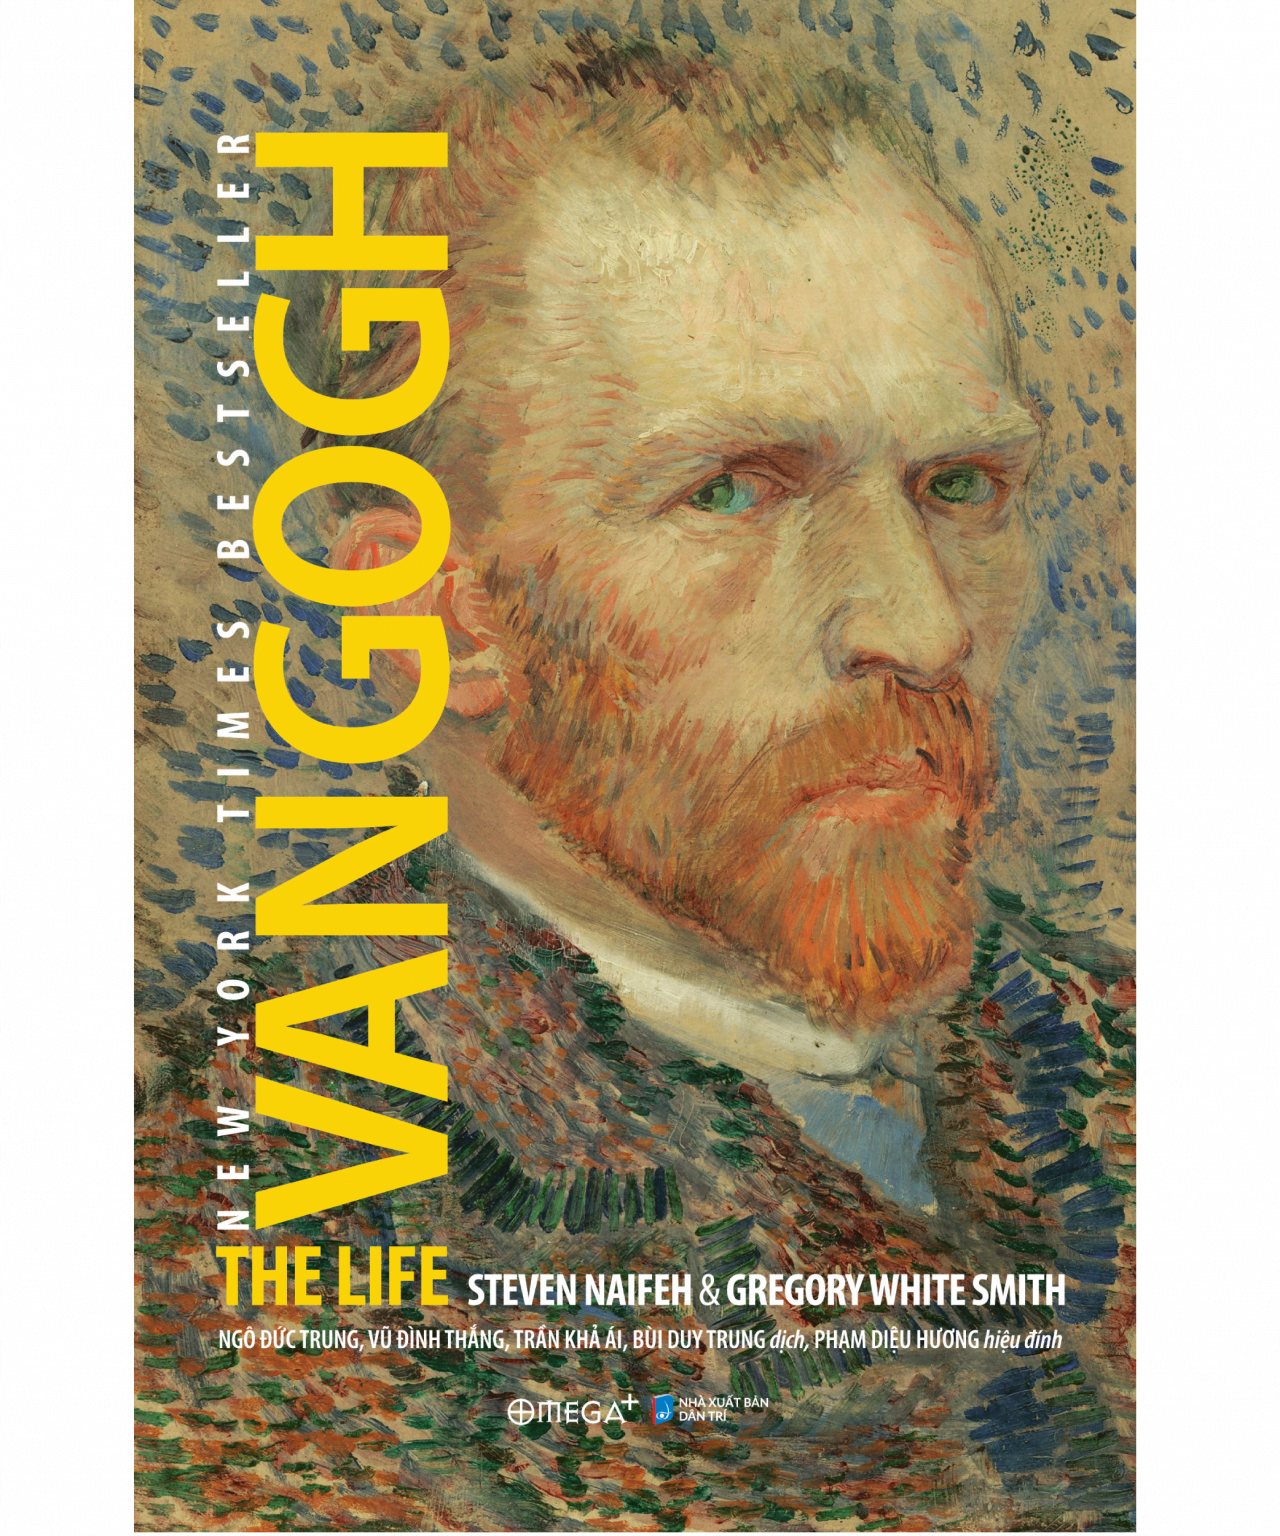 Van Gogh: The Life - Tác giả Steven Naifeh & Gregory White Smith